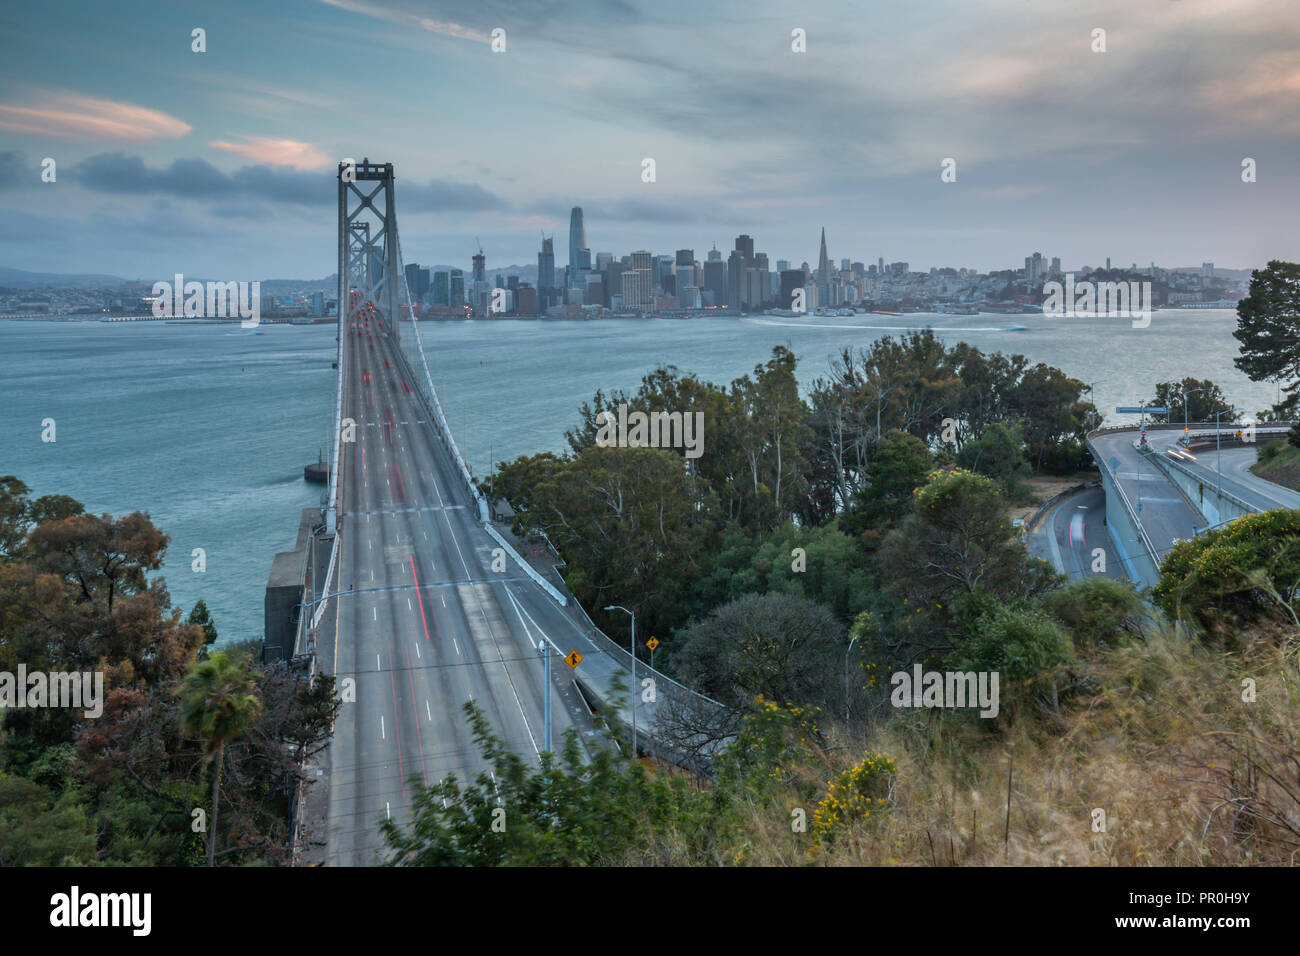 View of San Francisco skyline and Oakland Bay Bridge from Treasure Island at dusk, San Francisco, California, United States of America, North America Stock Photo